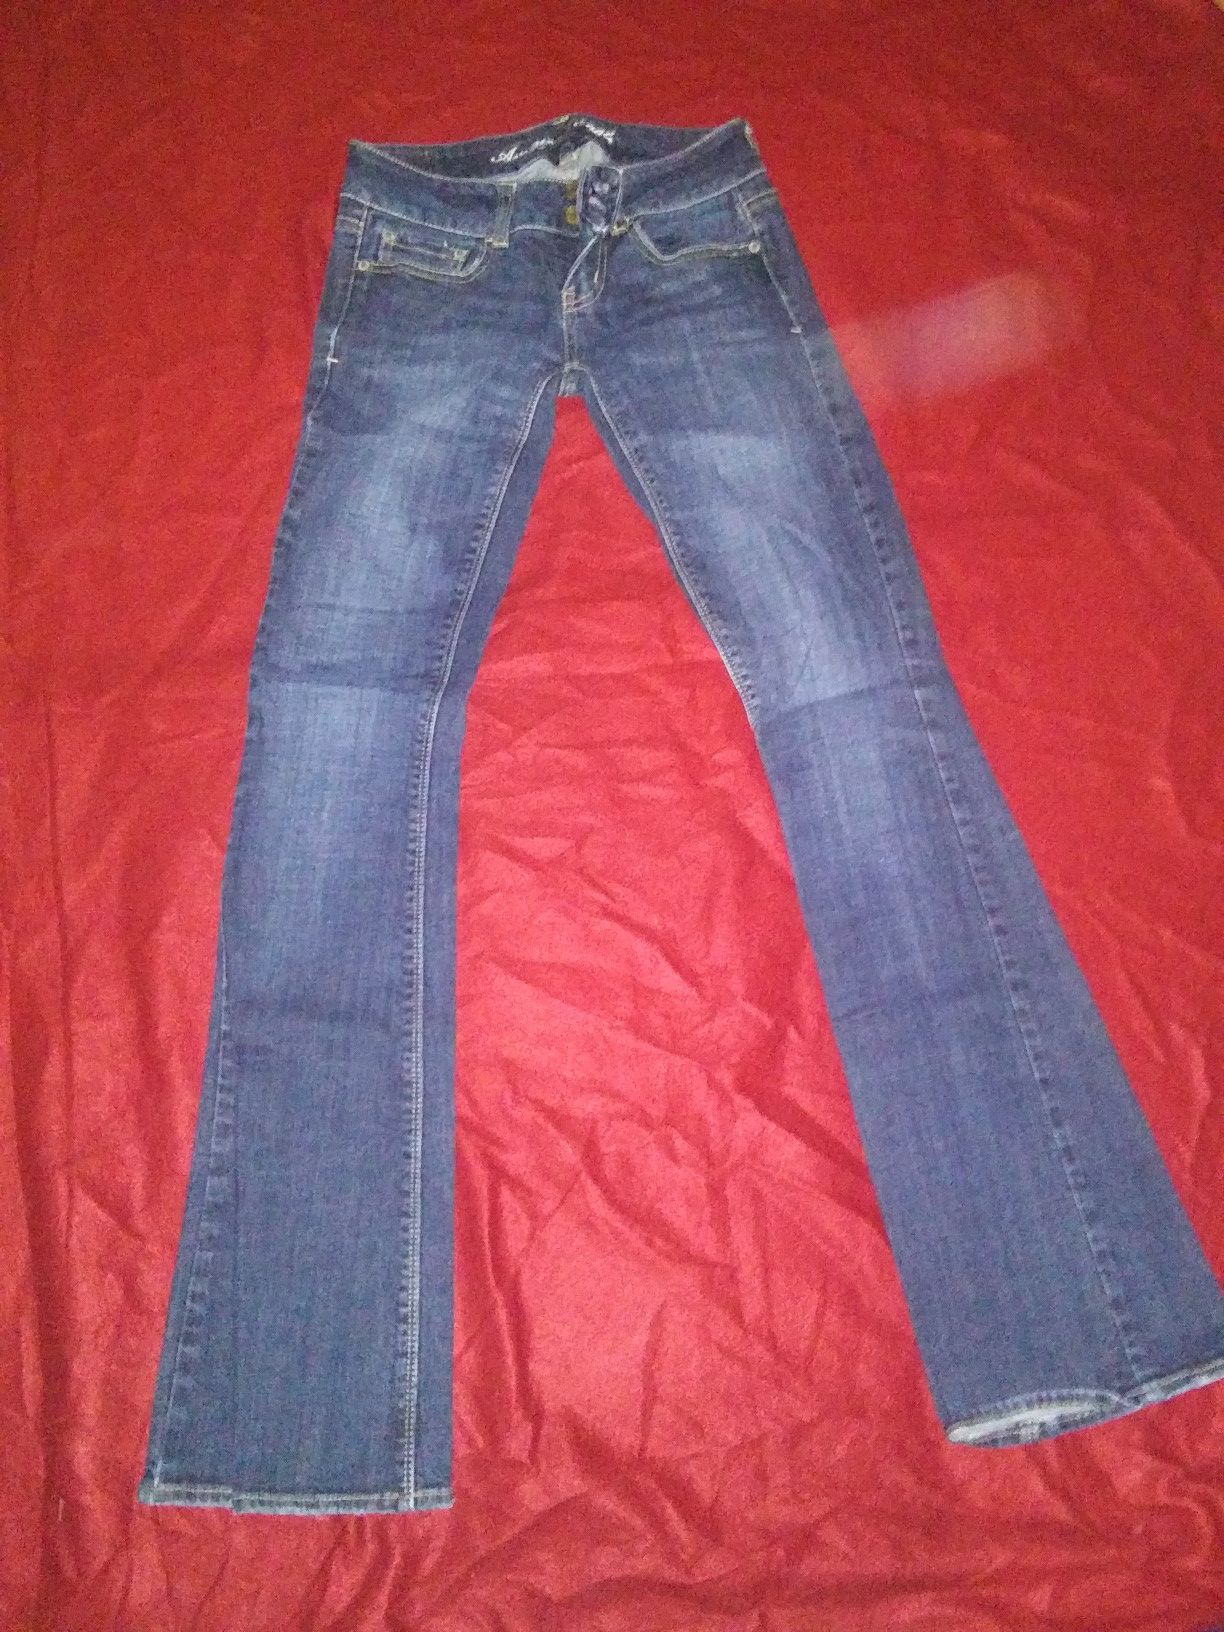 Size 0 jeans